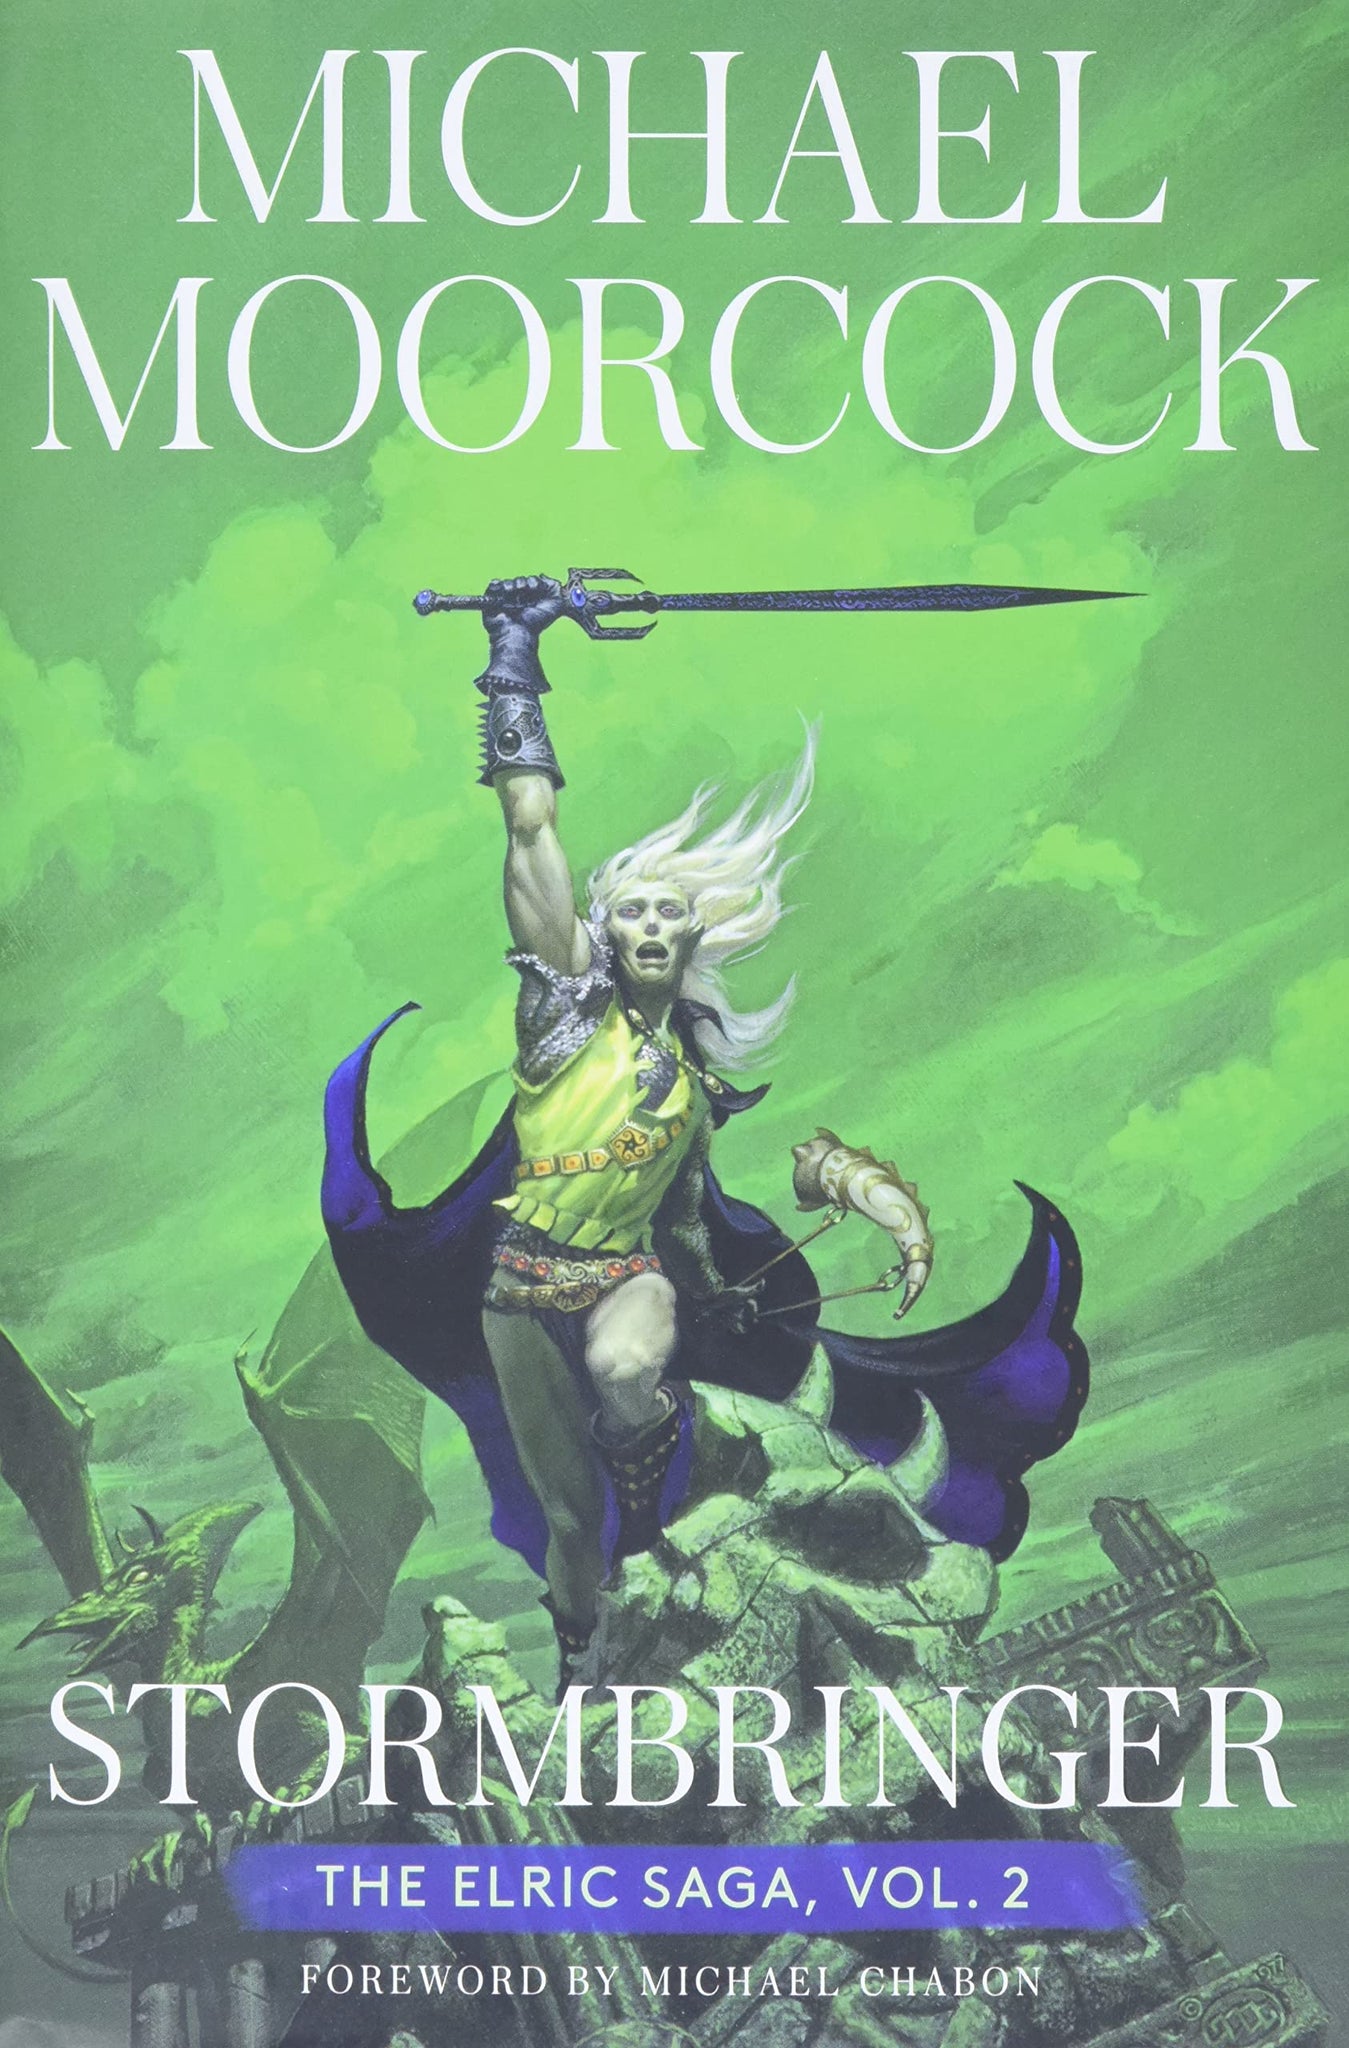 Stormbringer : The Elric Saga Vol 2 by Michael Moorcock